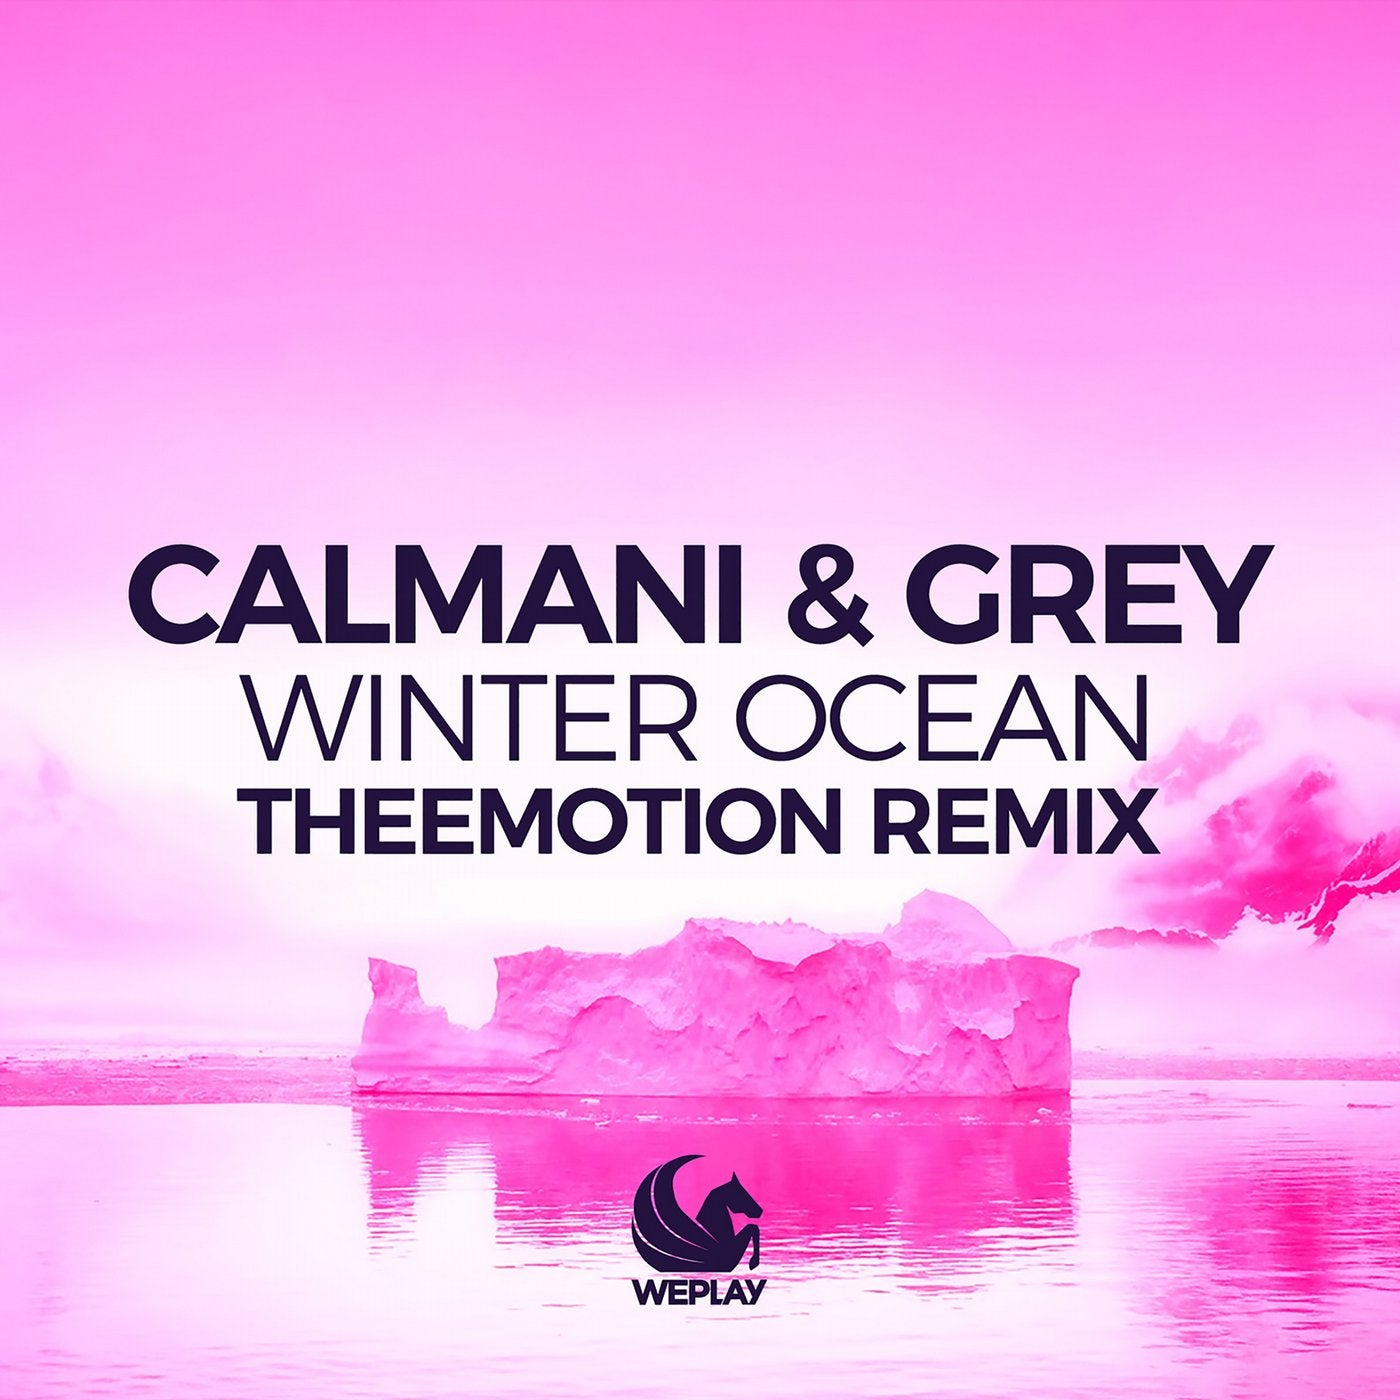 Winter Ocean (Theemotion Remix)